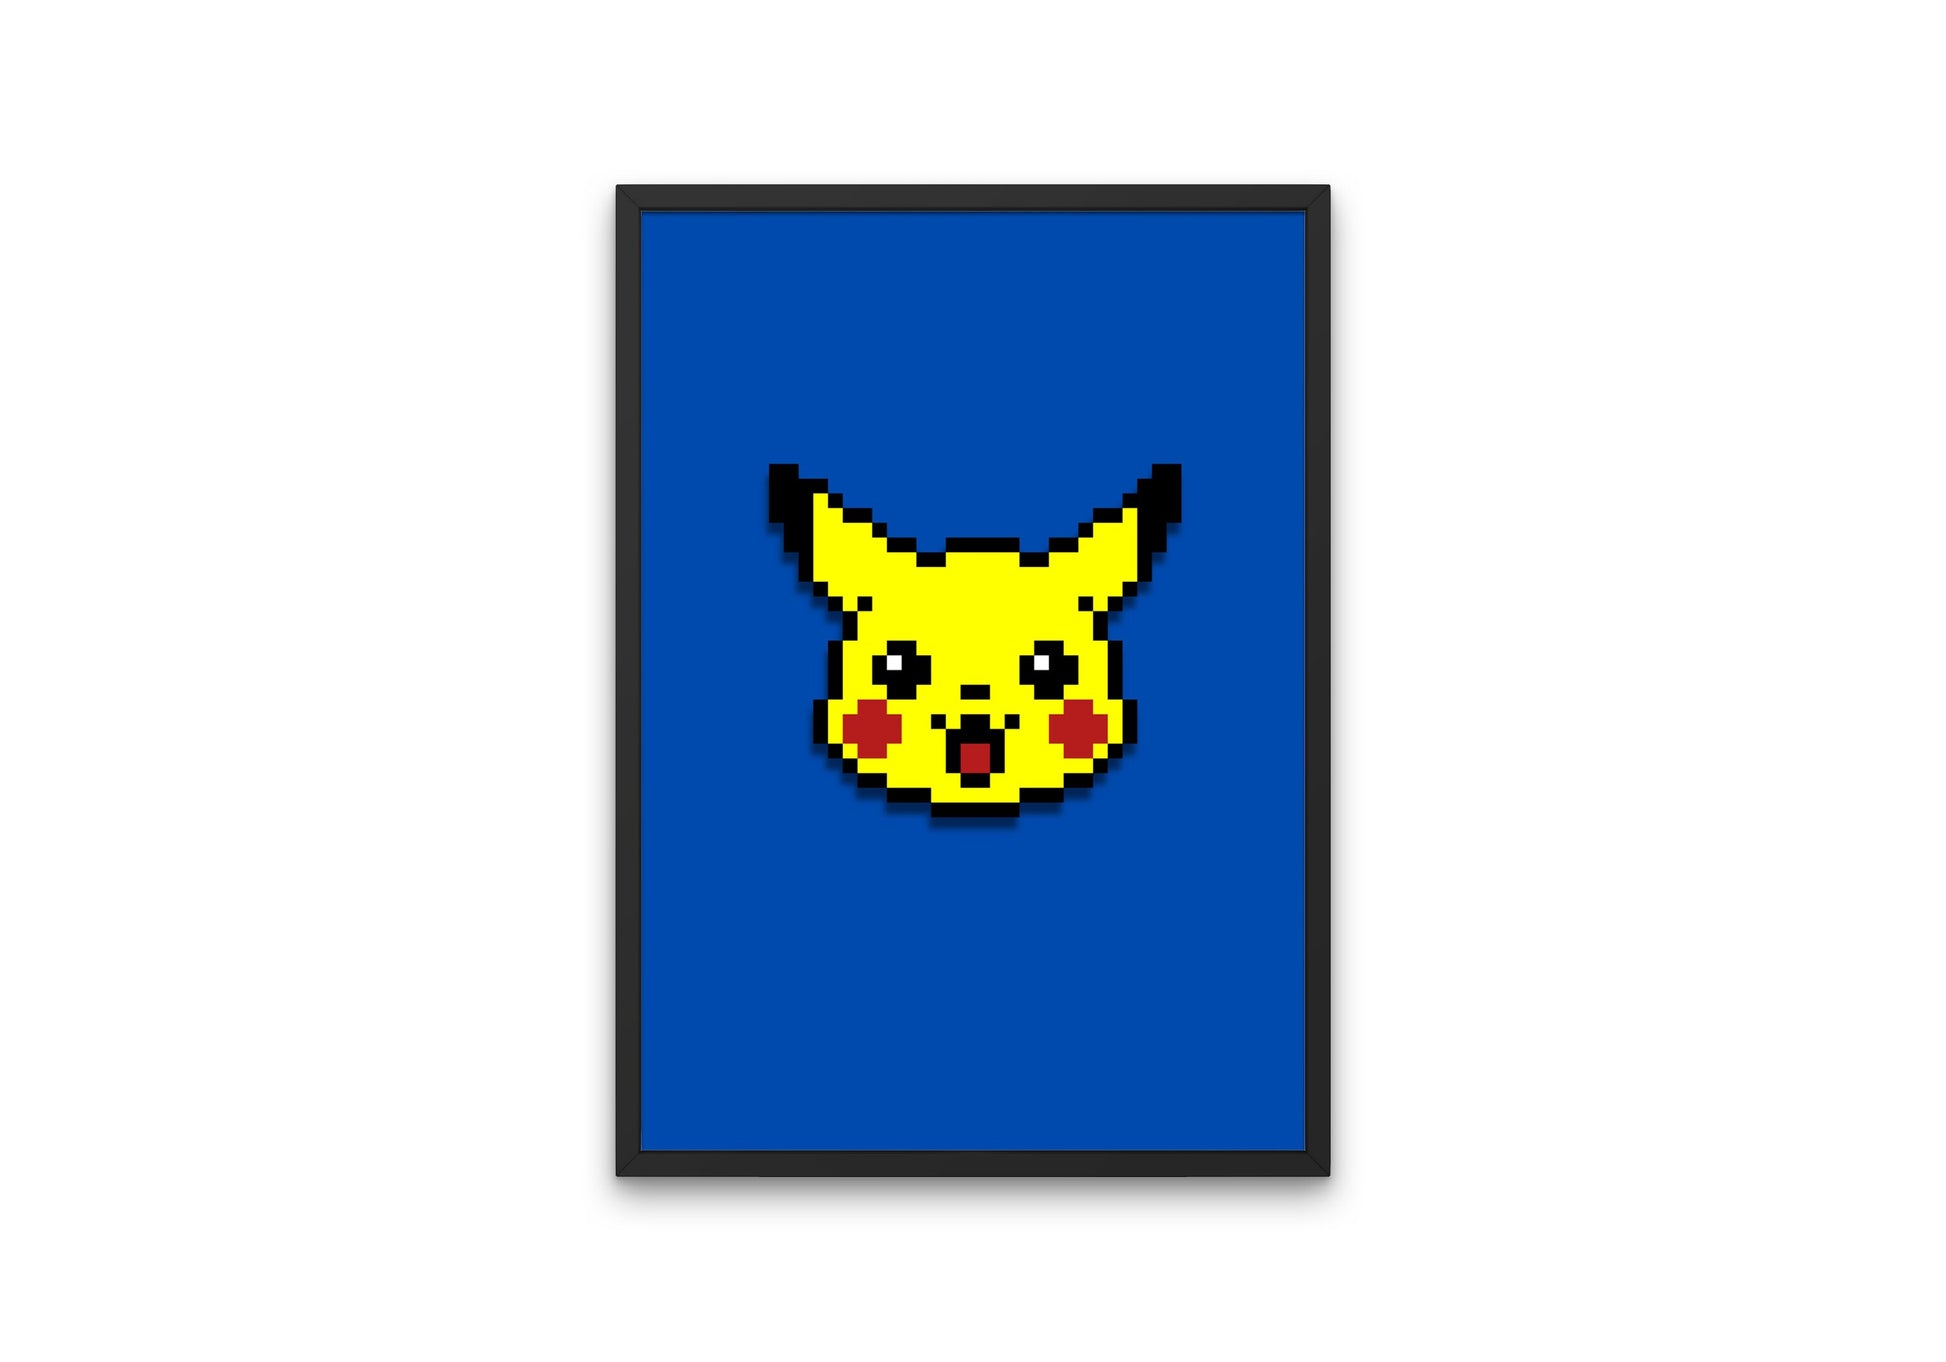 Pikachu Poster INSTANT DOWNLOAD, gaming poster, retro game poster, Pokemon printables, pokemon go, Pikachu, pokemon figure, pixel art print